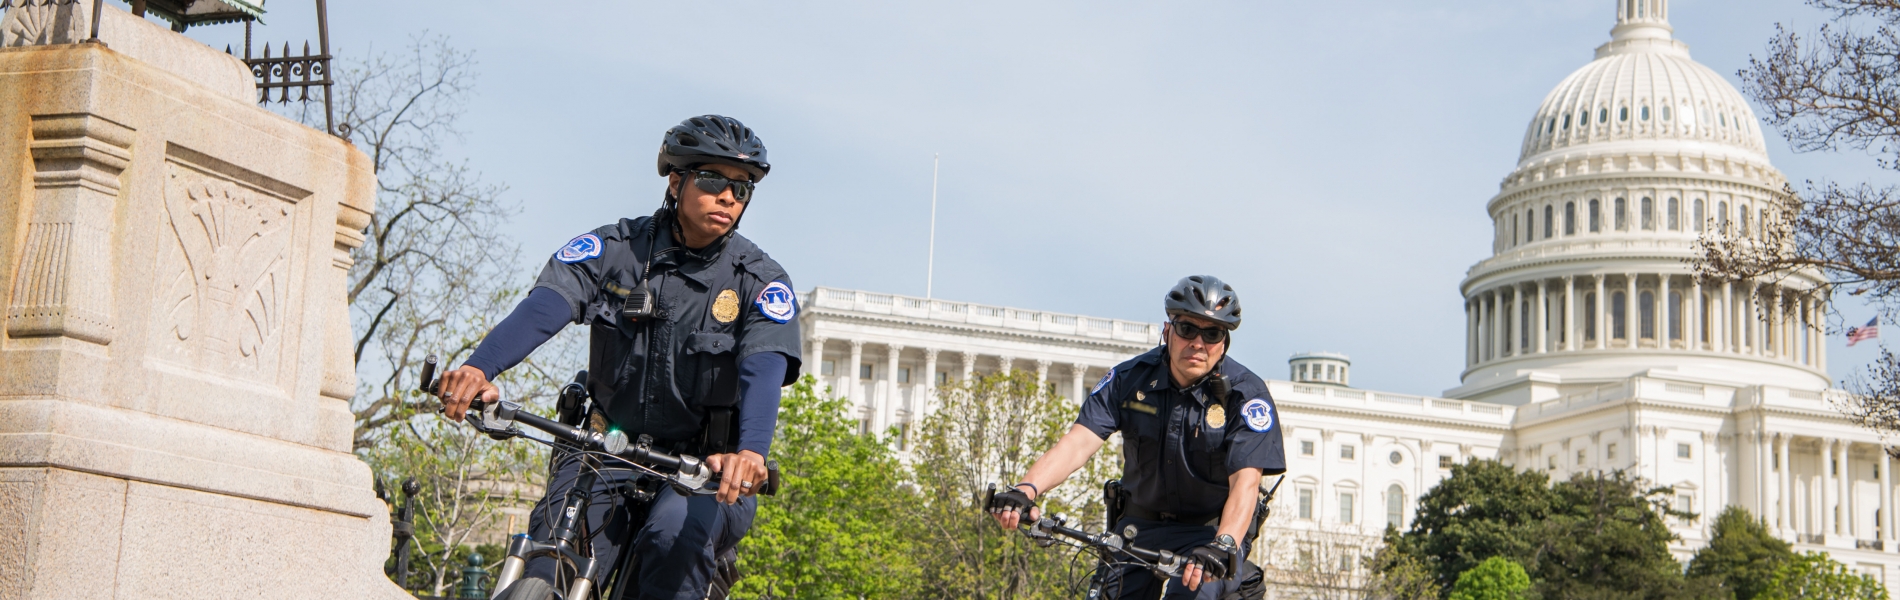 Capital Police Bike Officers